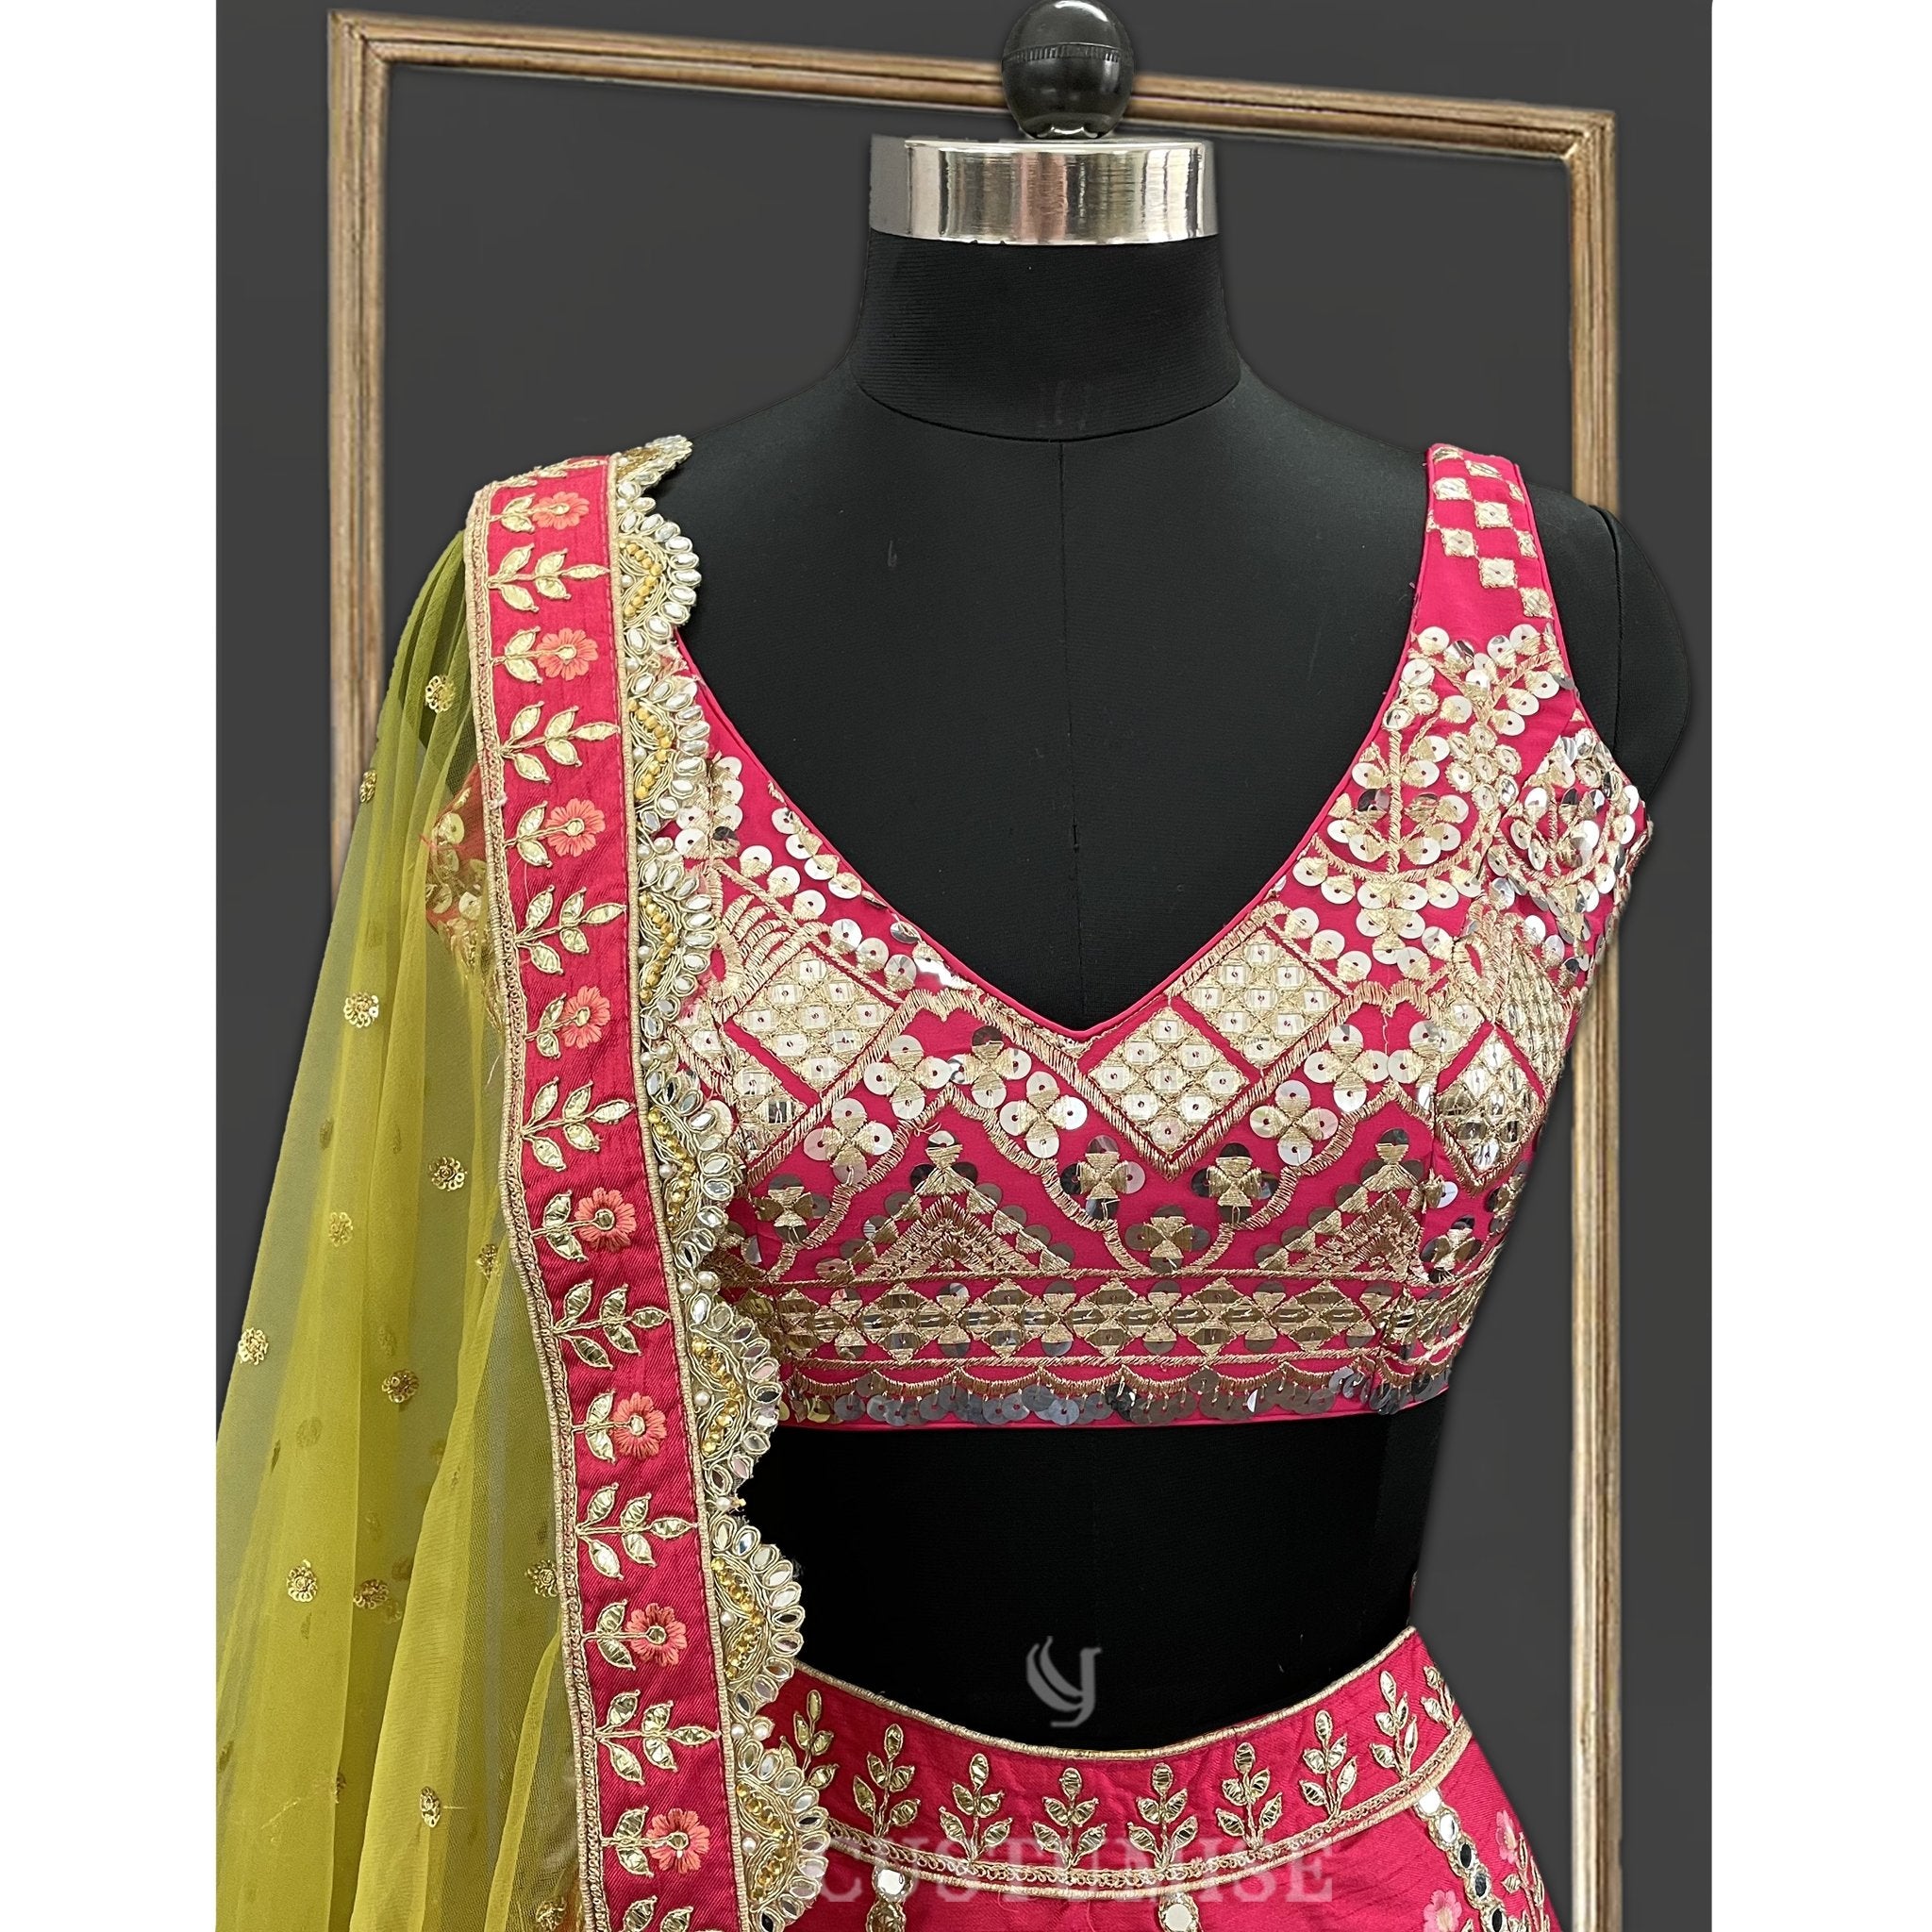 Enchanting Reflections: Reddish Pink Mirror Lehenga - Indian Designer Bridal Wedding Outfit